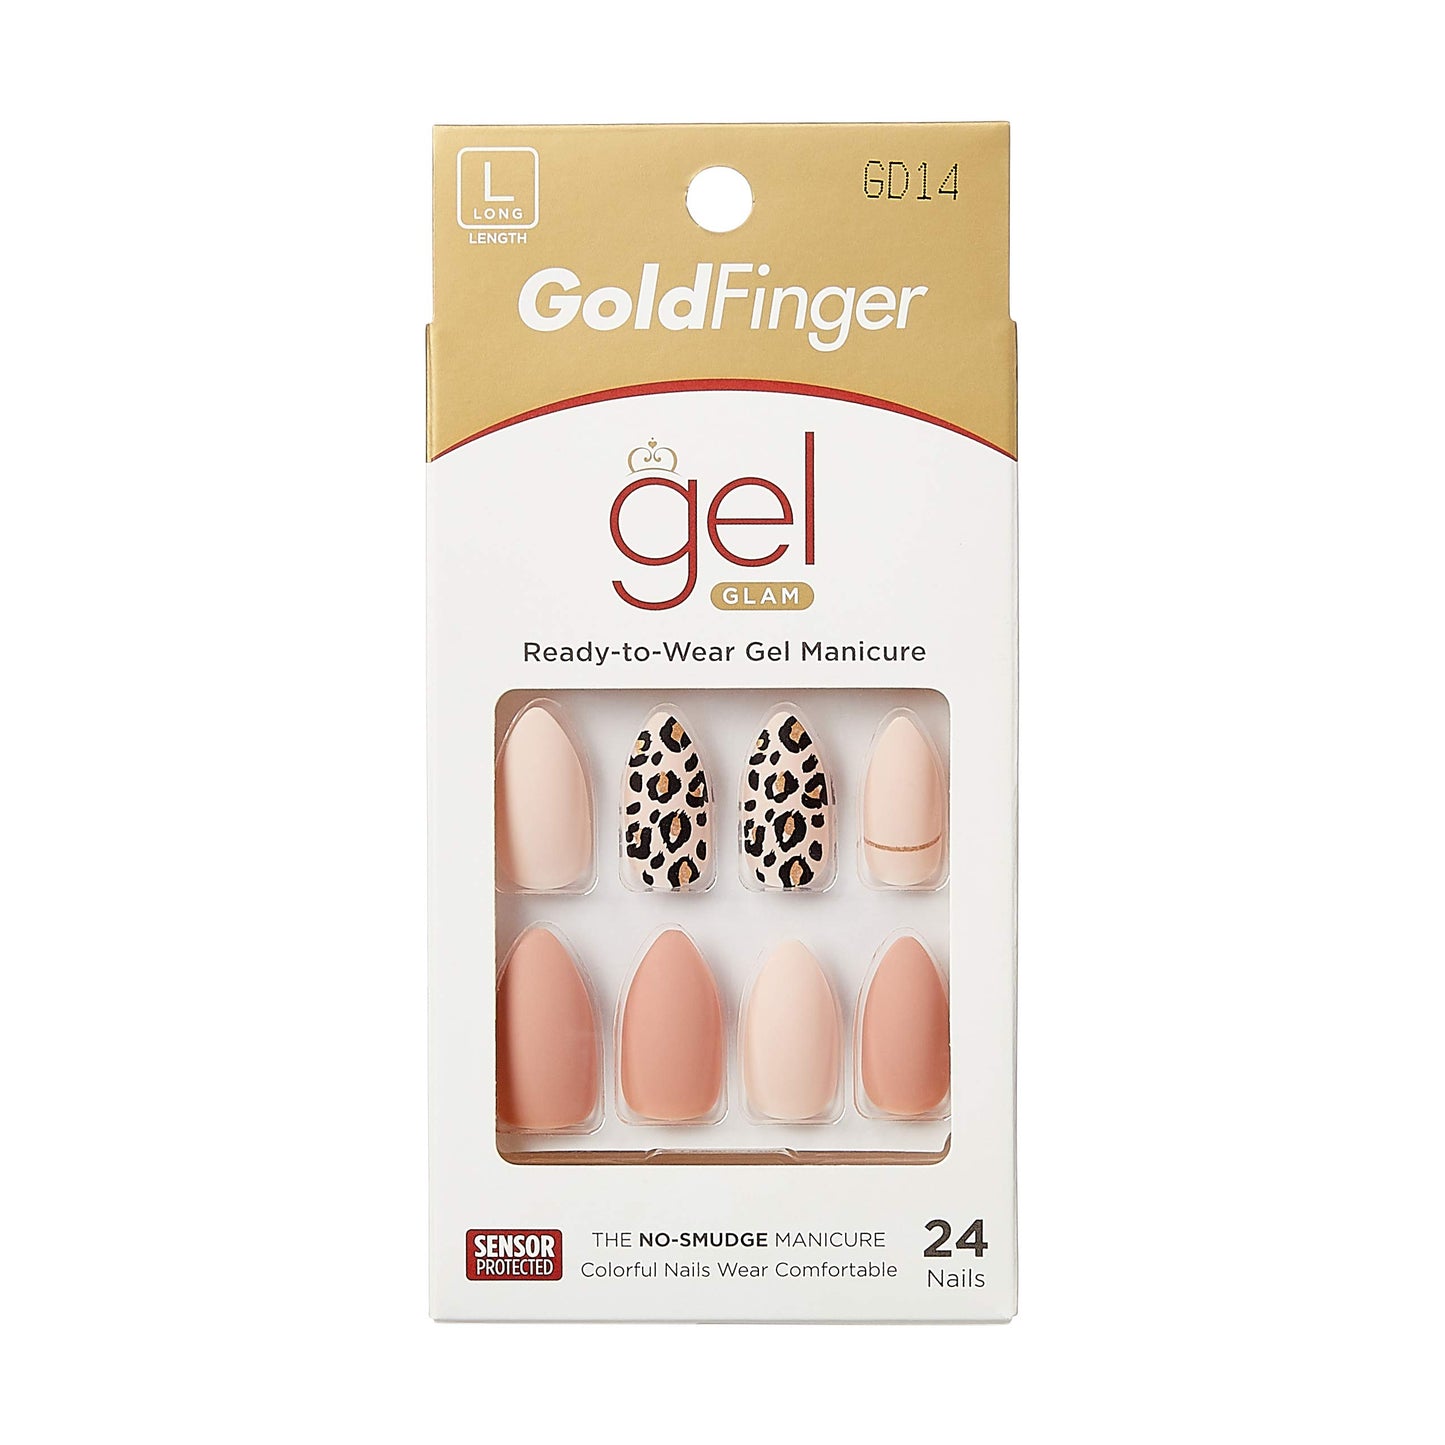 KISS GoldFinger Gel Glam Nails